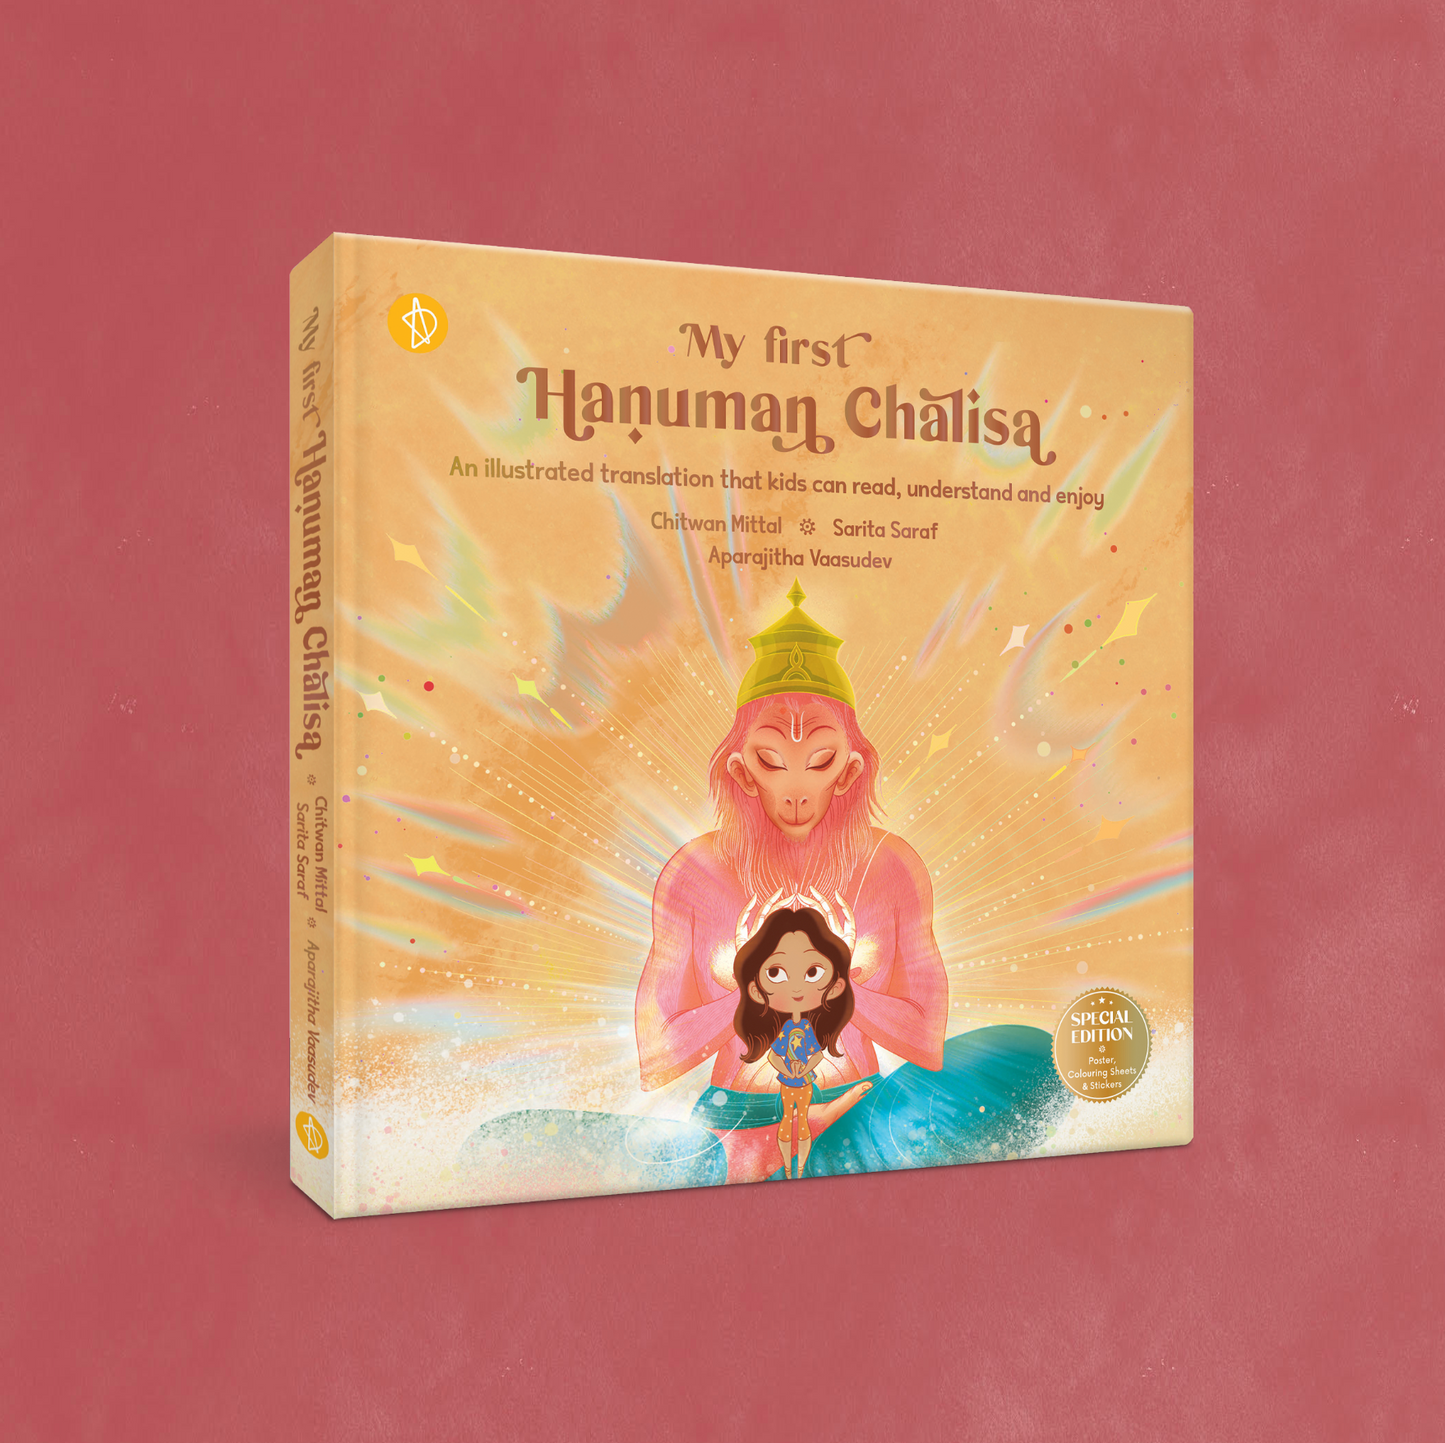 My first Hanuman Chalisa – Special Edition by Adidev Press